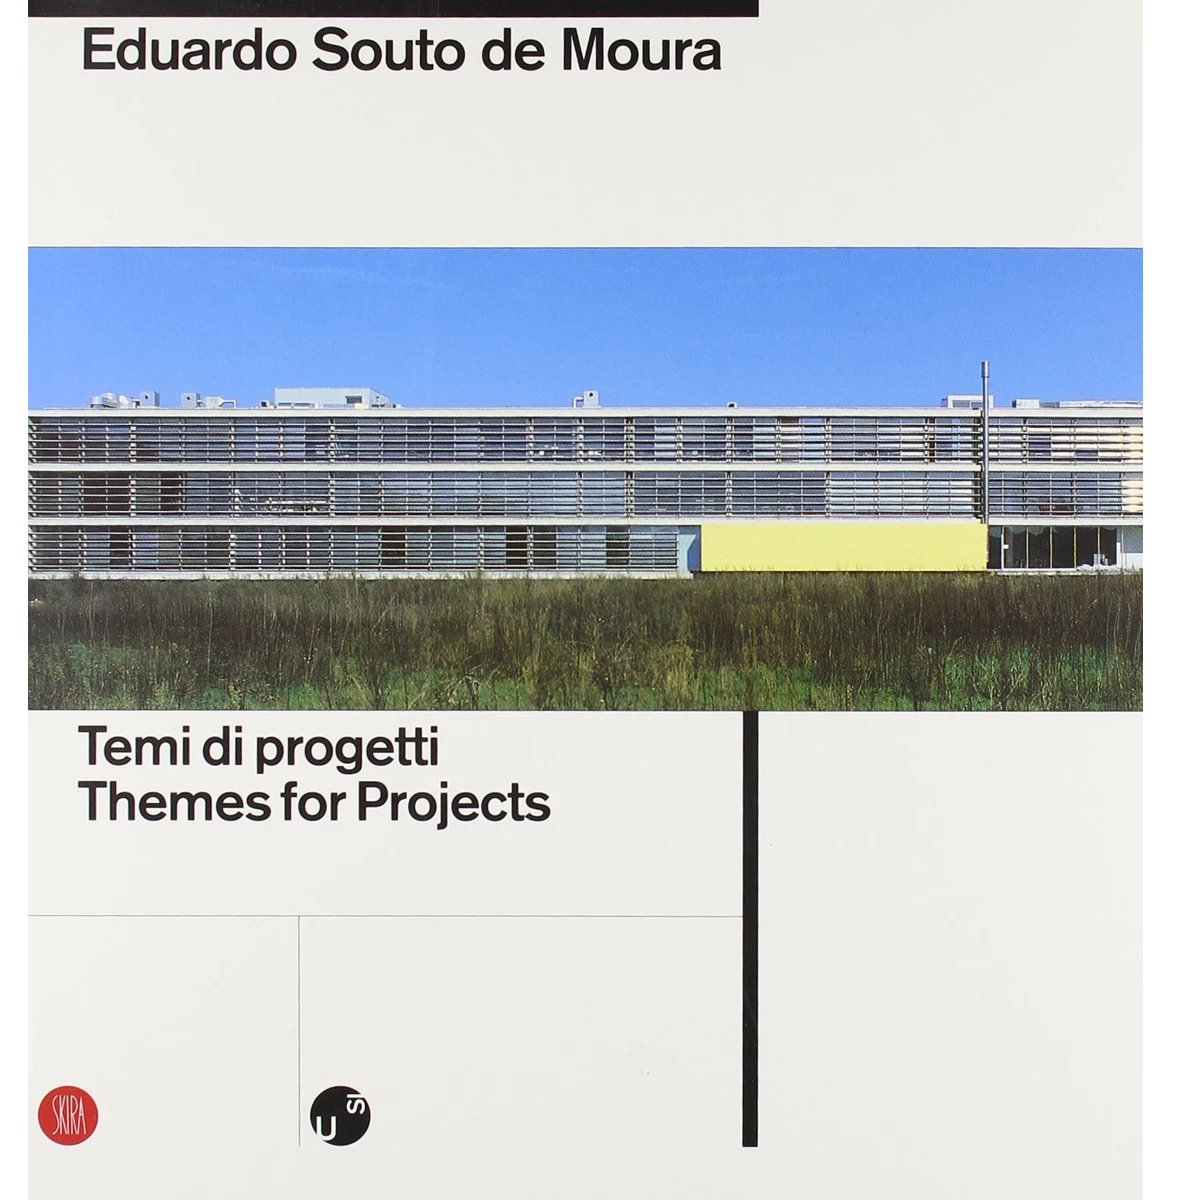 Eduardo Souto de Moura: Themes for projects